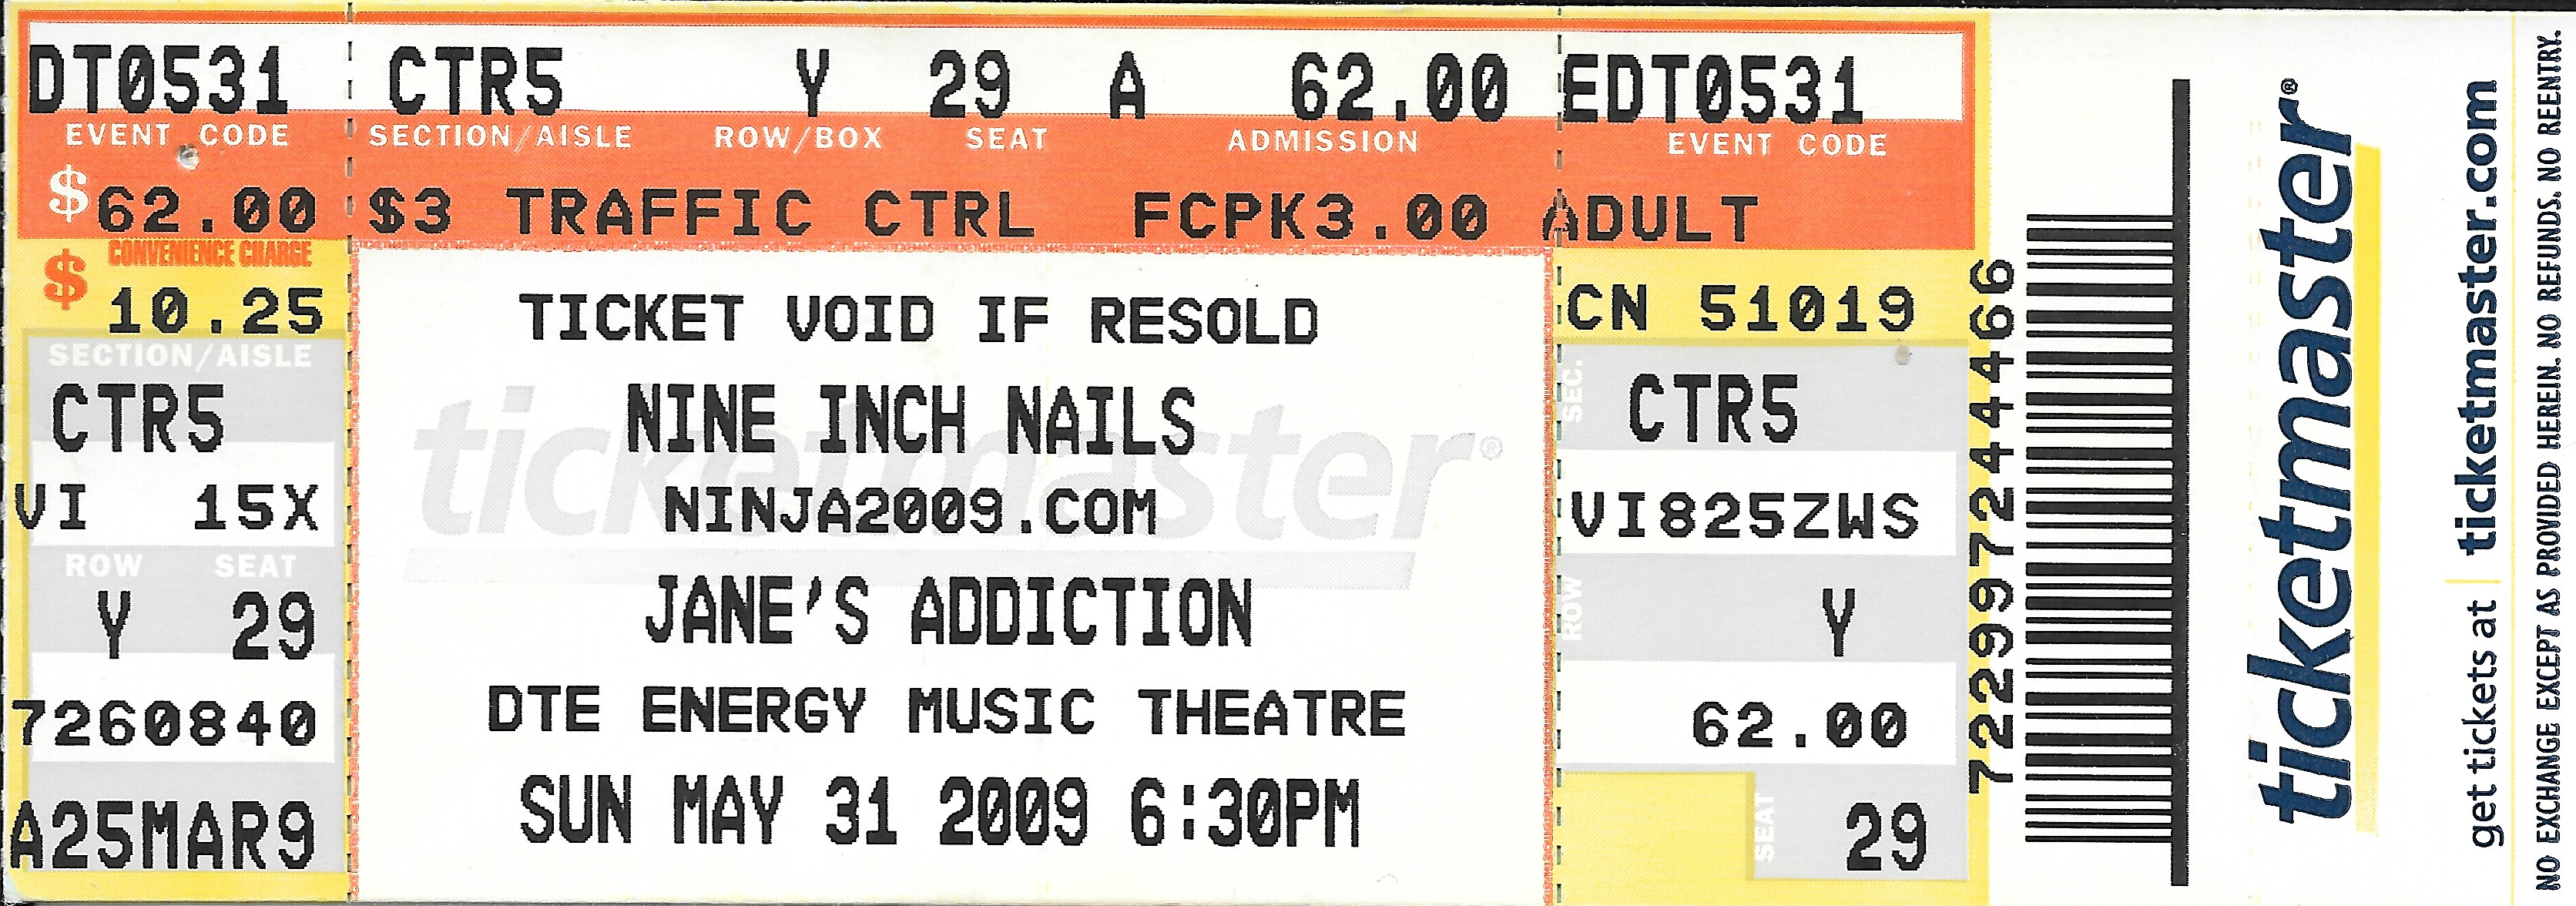 2009/05/31 Ticket